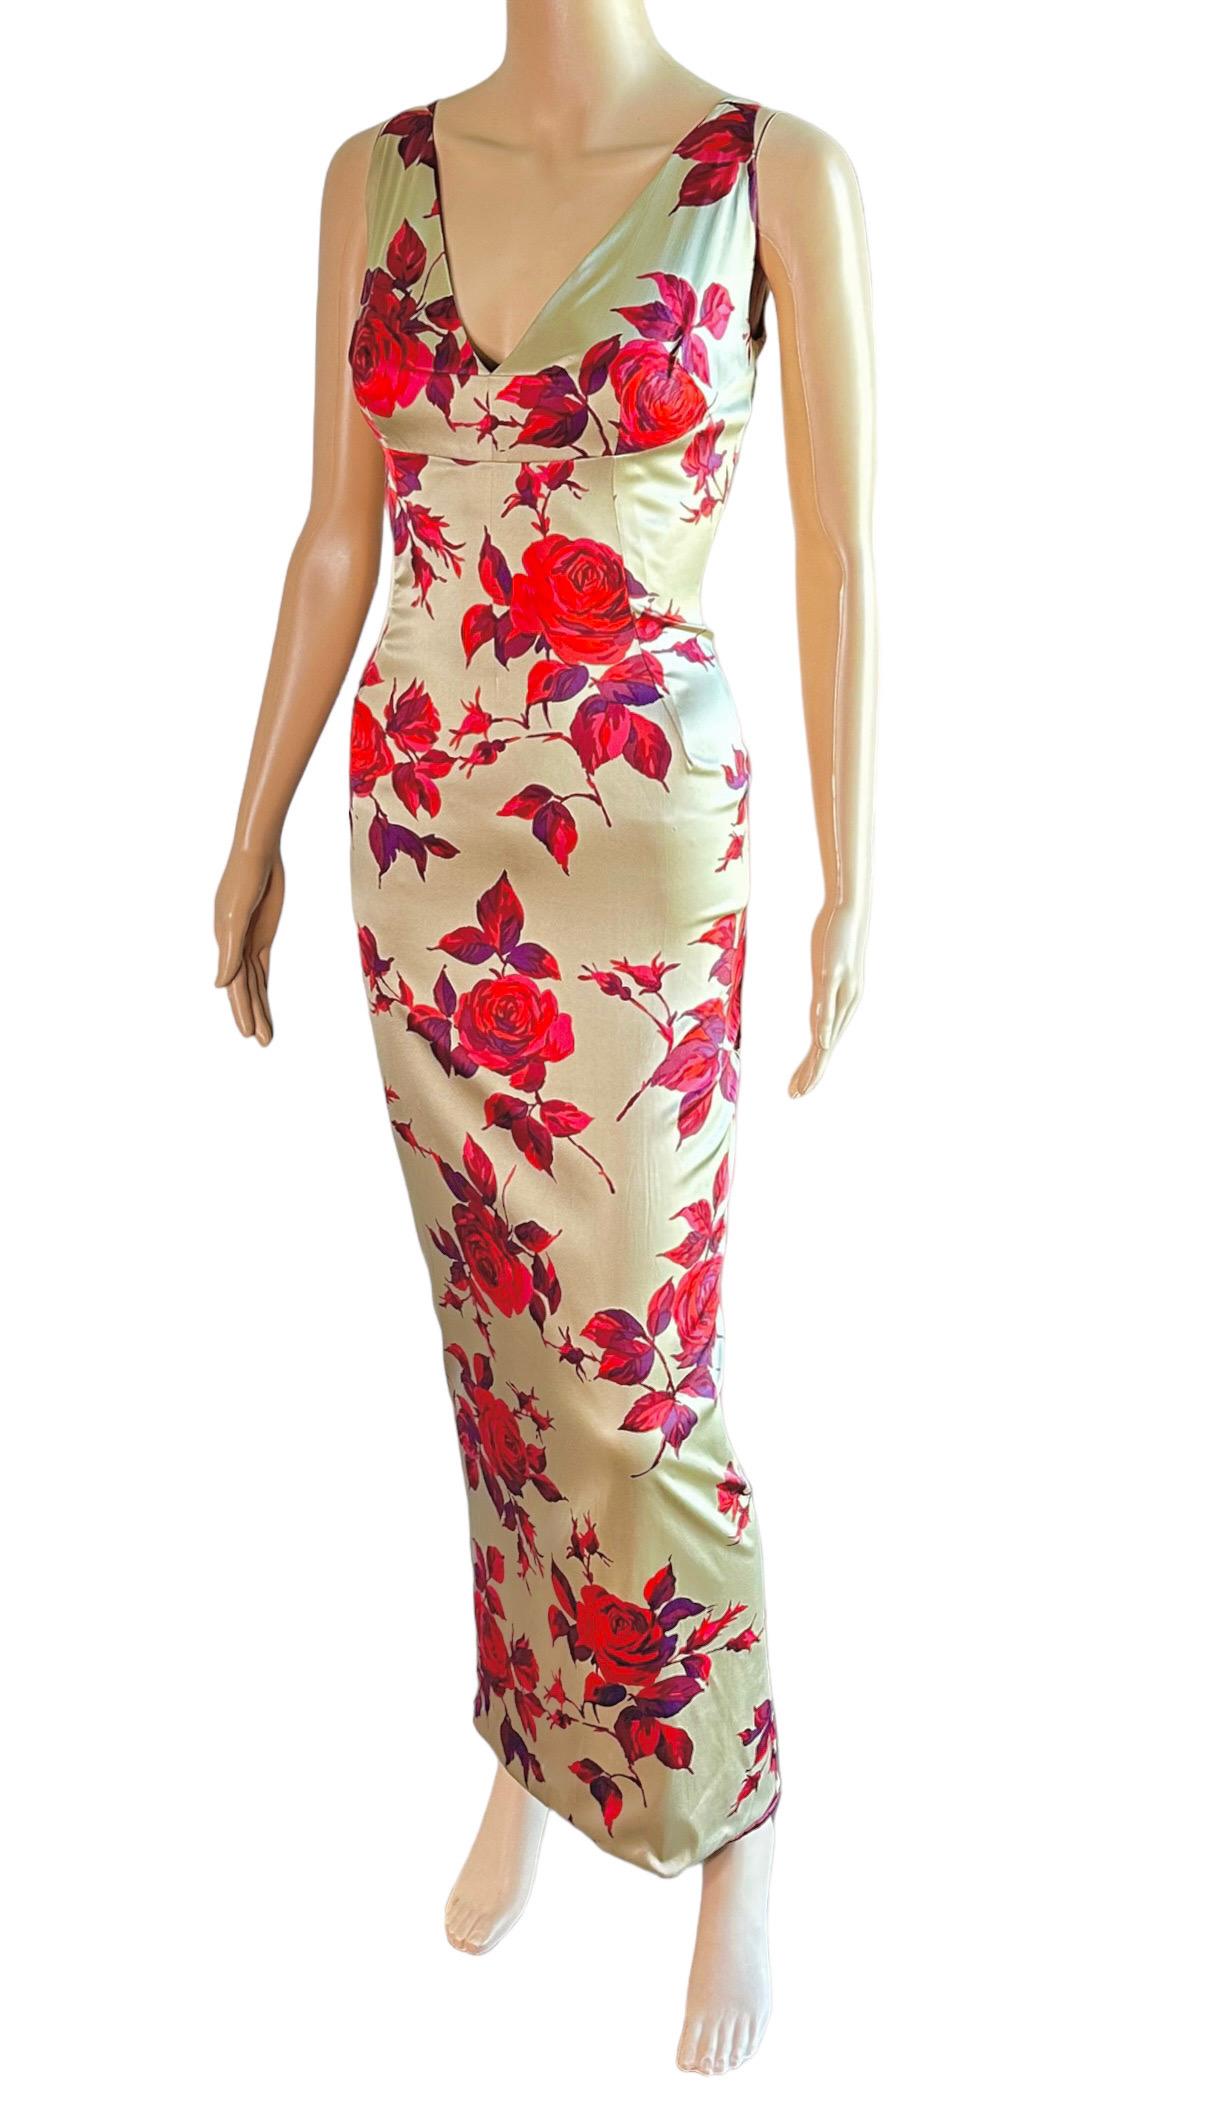 Dolce & Gabbana 1990's Vintage Unworn Silk Floral Rose Print Evening Dress Gown For Sale 5